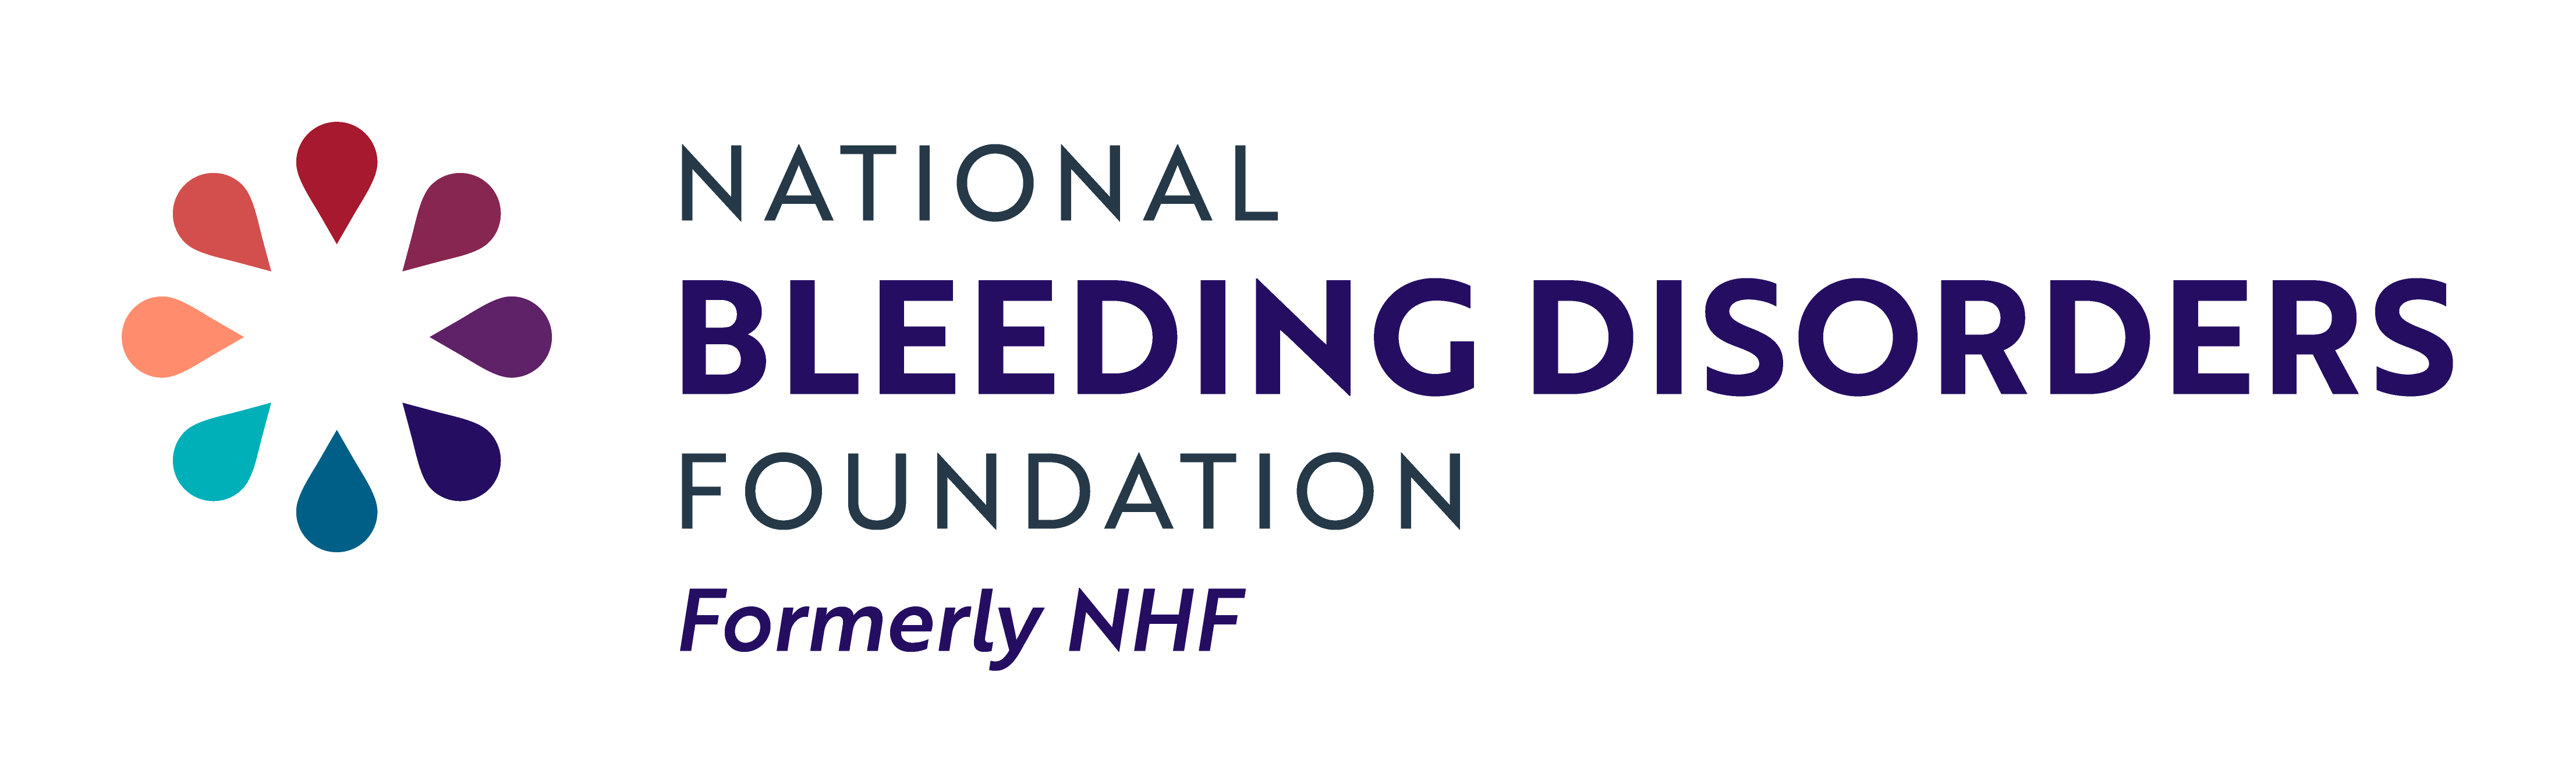 NBDF logo